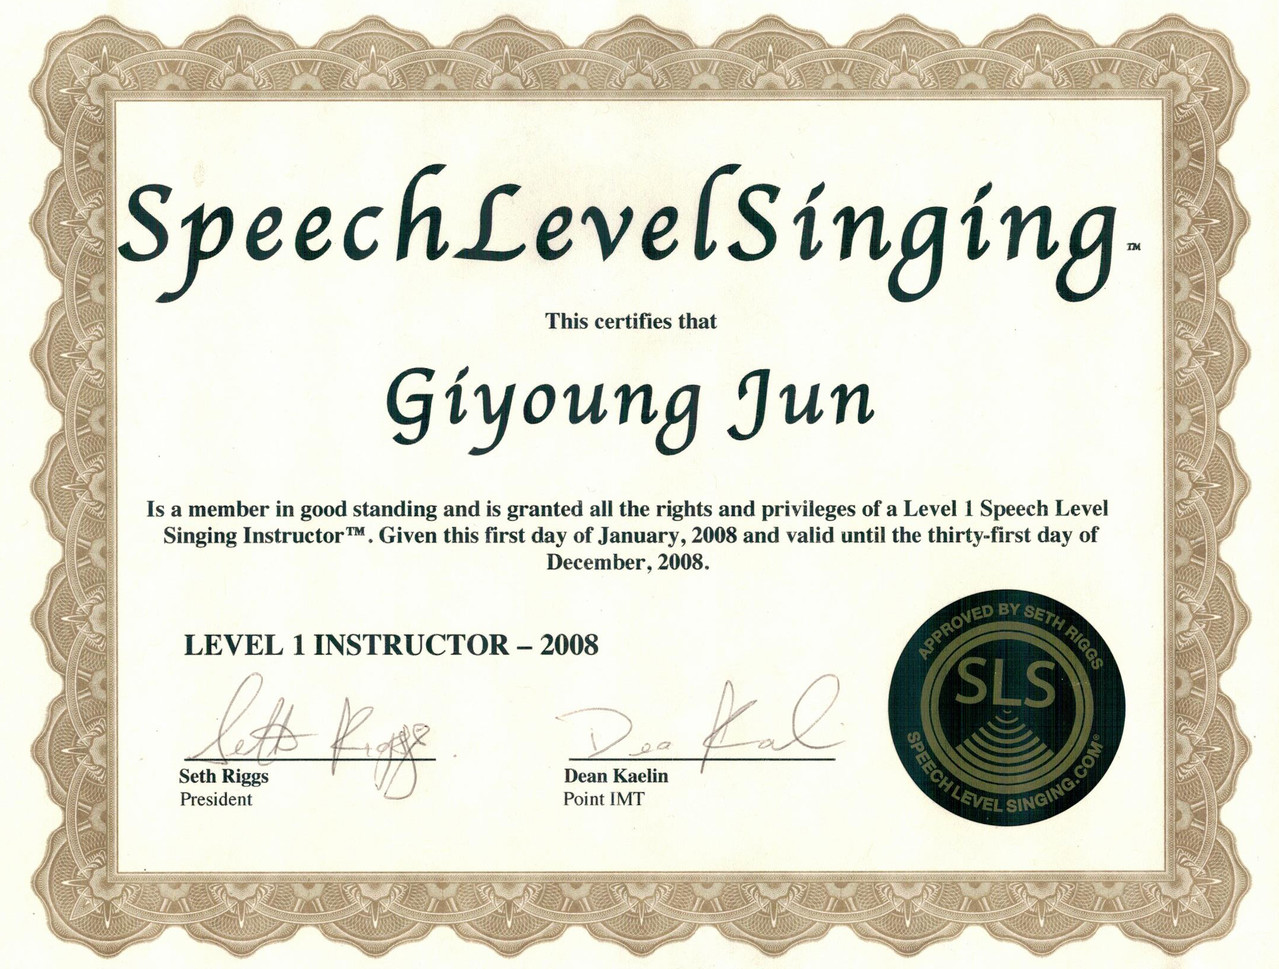 Seech Level Singing 2008